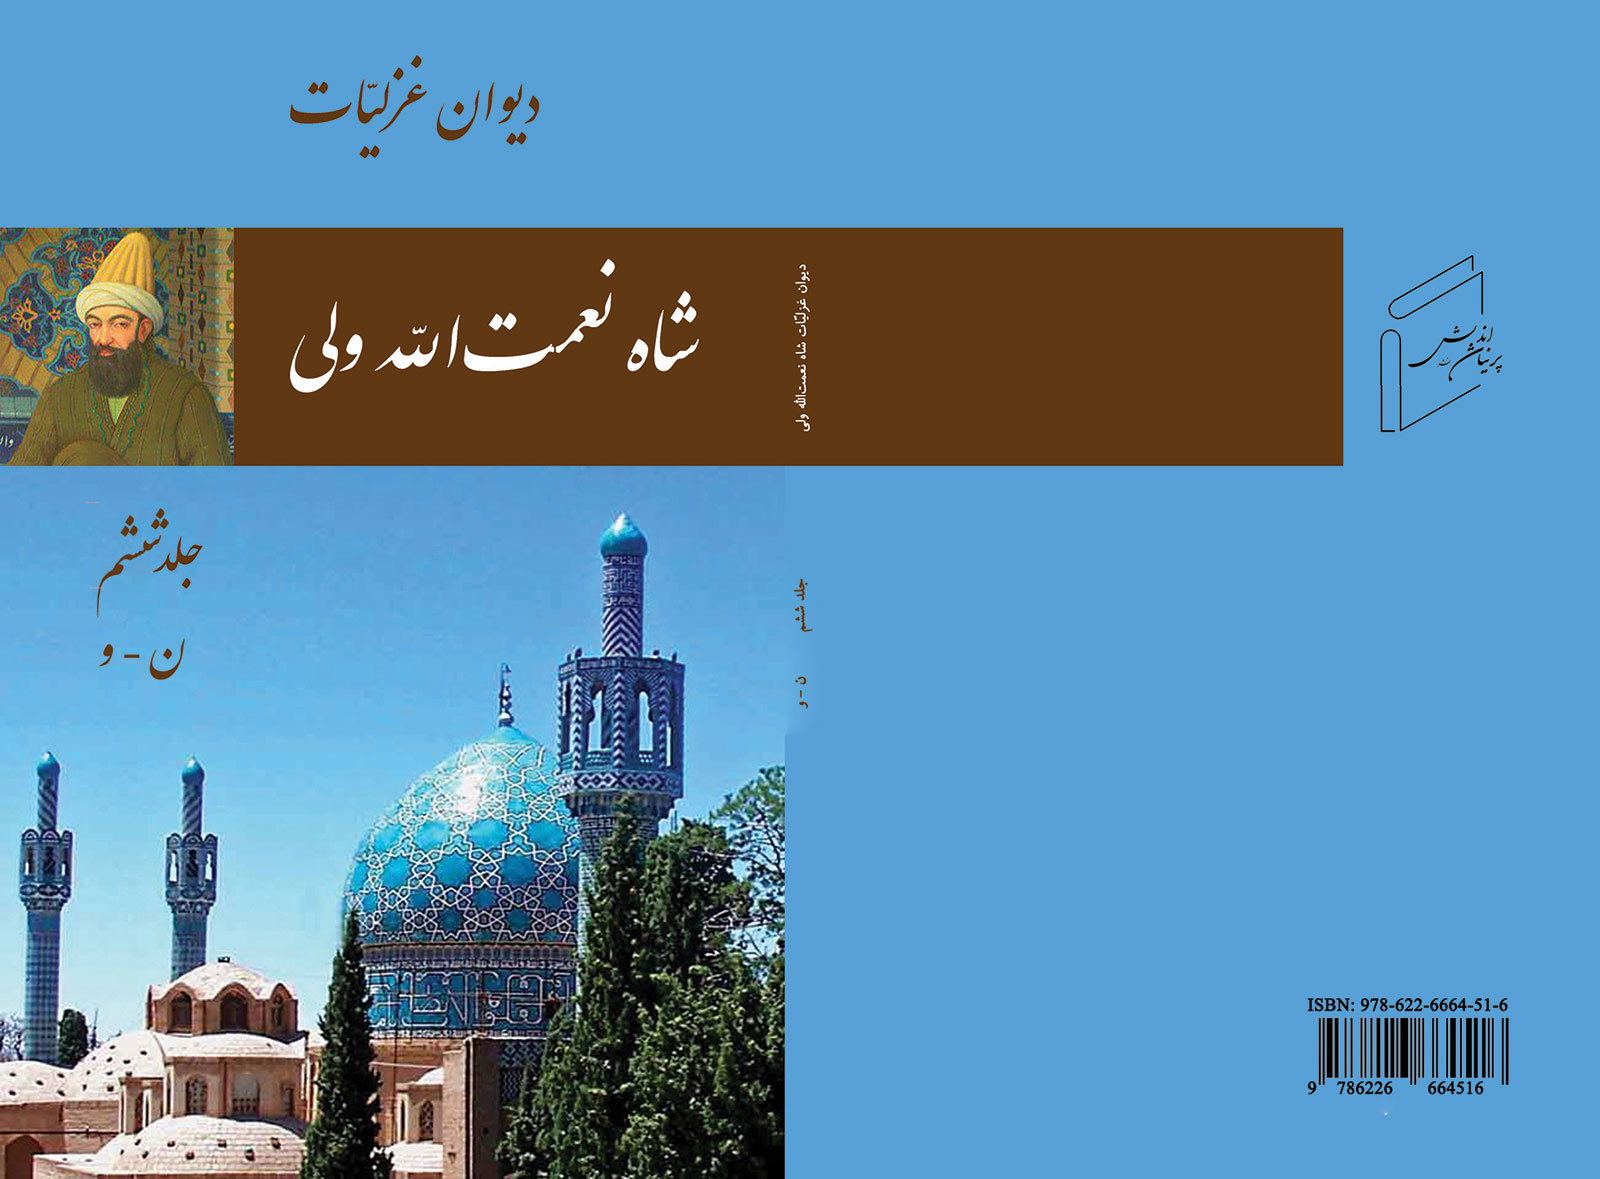 The Diwan of Shah Nematullah Vali, Ghazliat - Volume 6